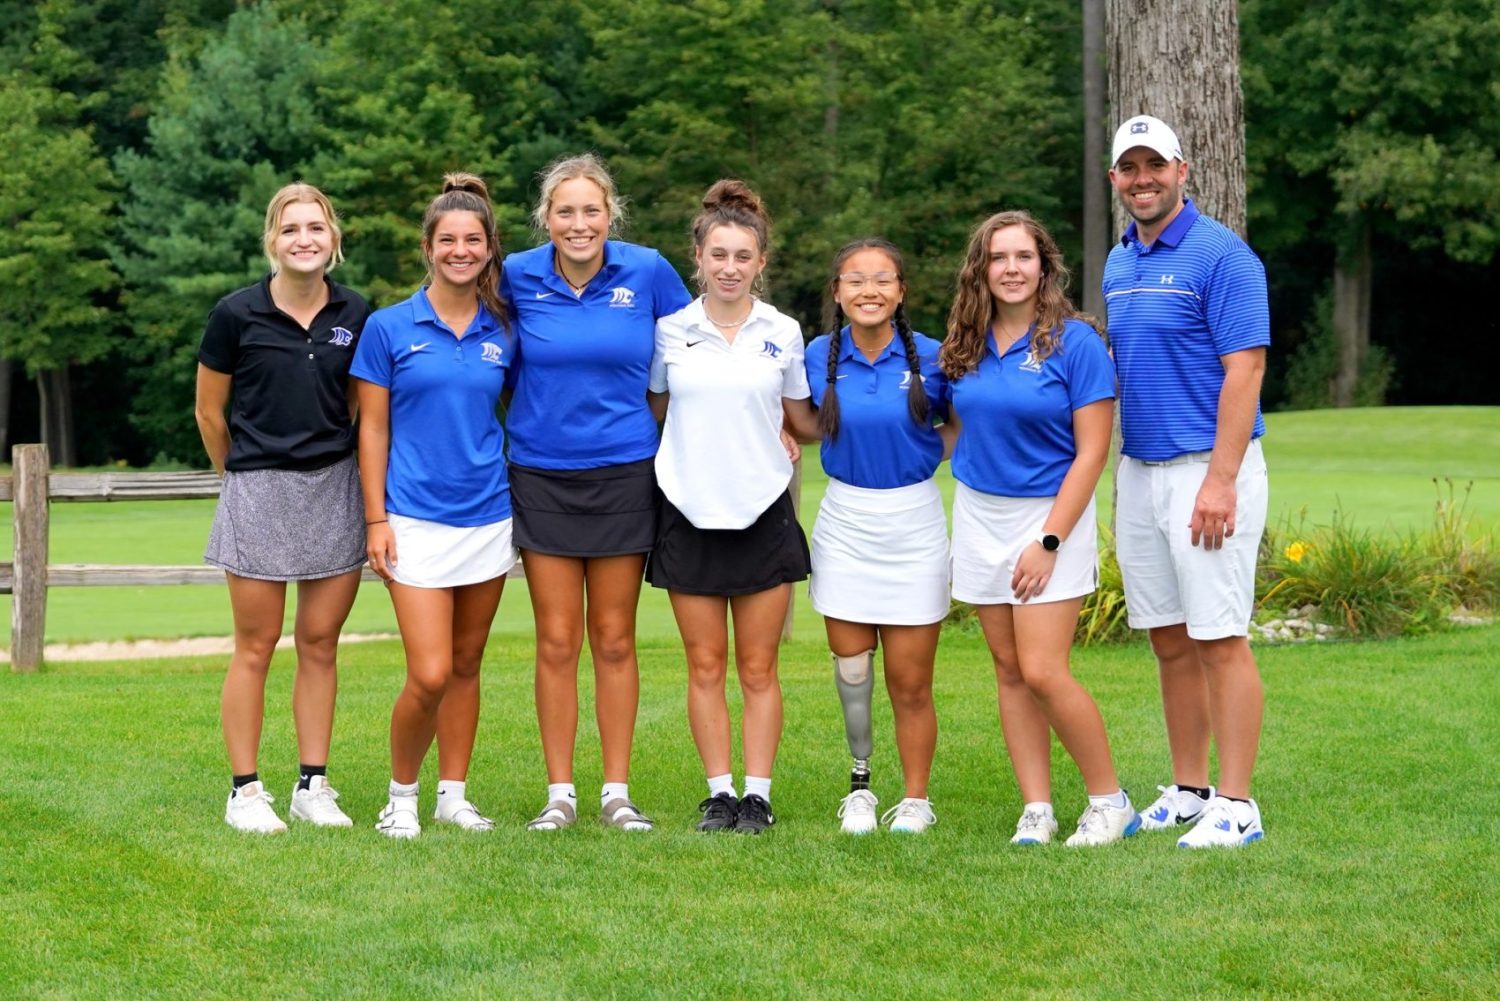 Montague girls golf team takes top spot at Rocket Invitational